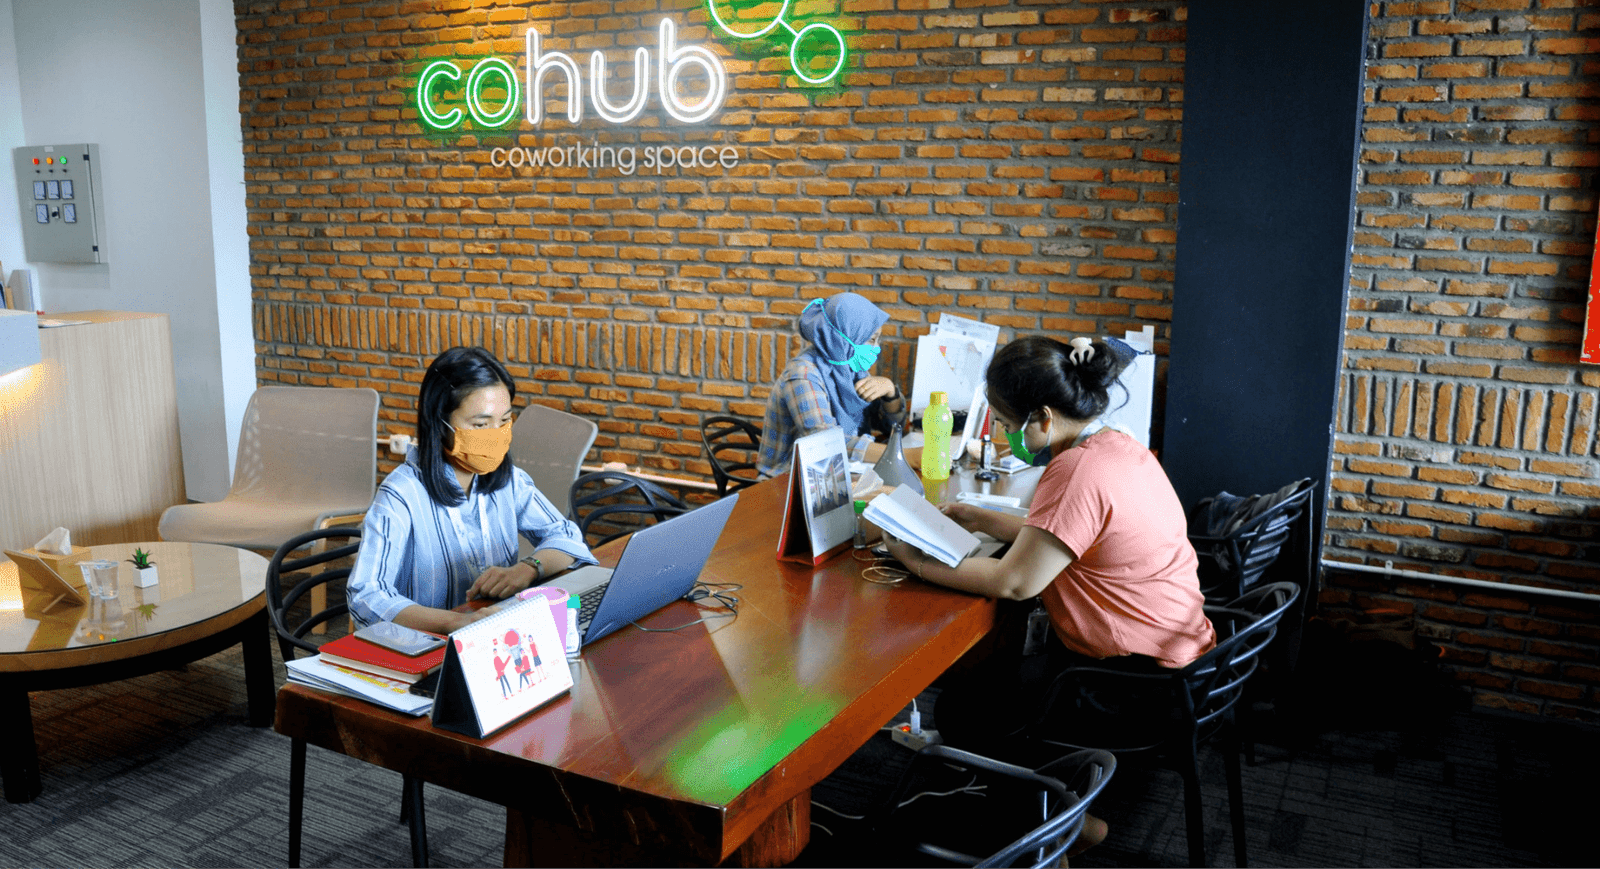 3 customers working on Cohub Coworking Space's Hotdesk